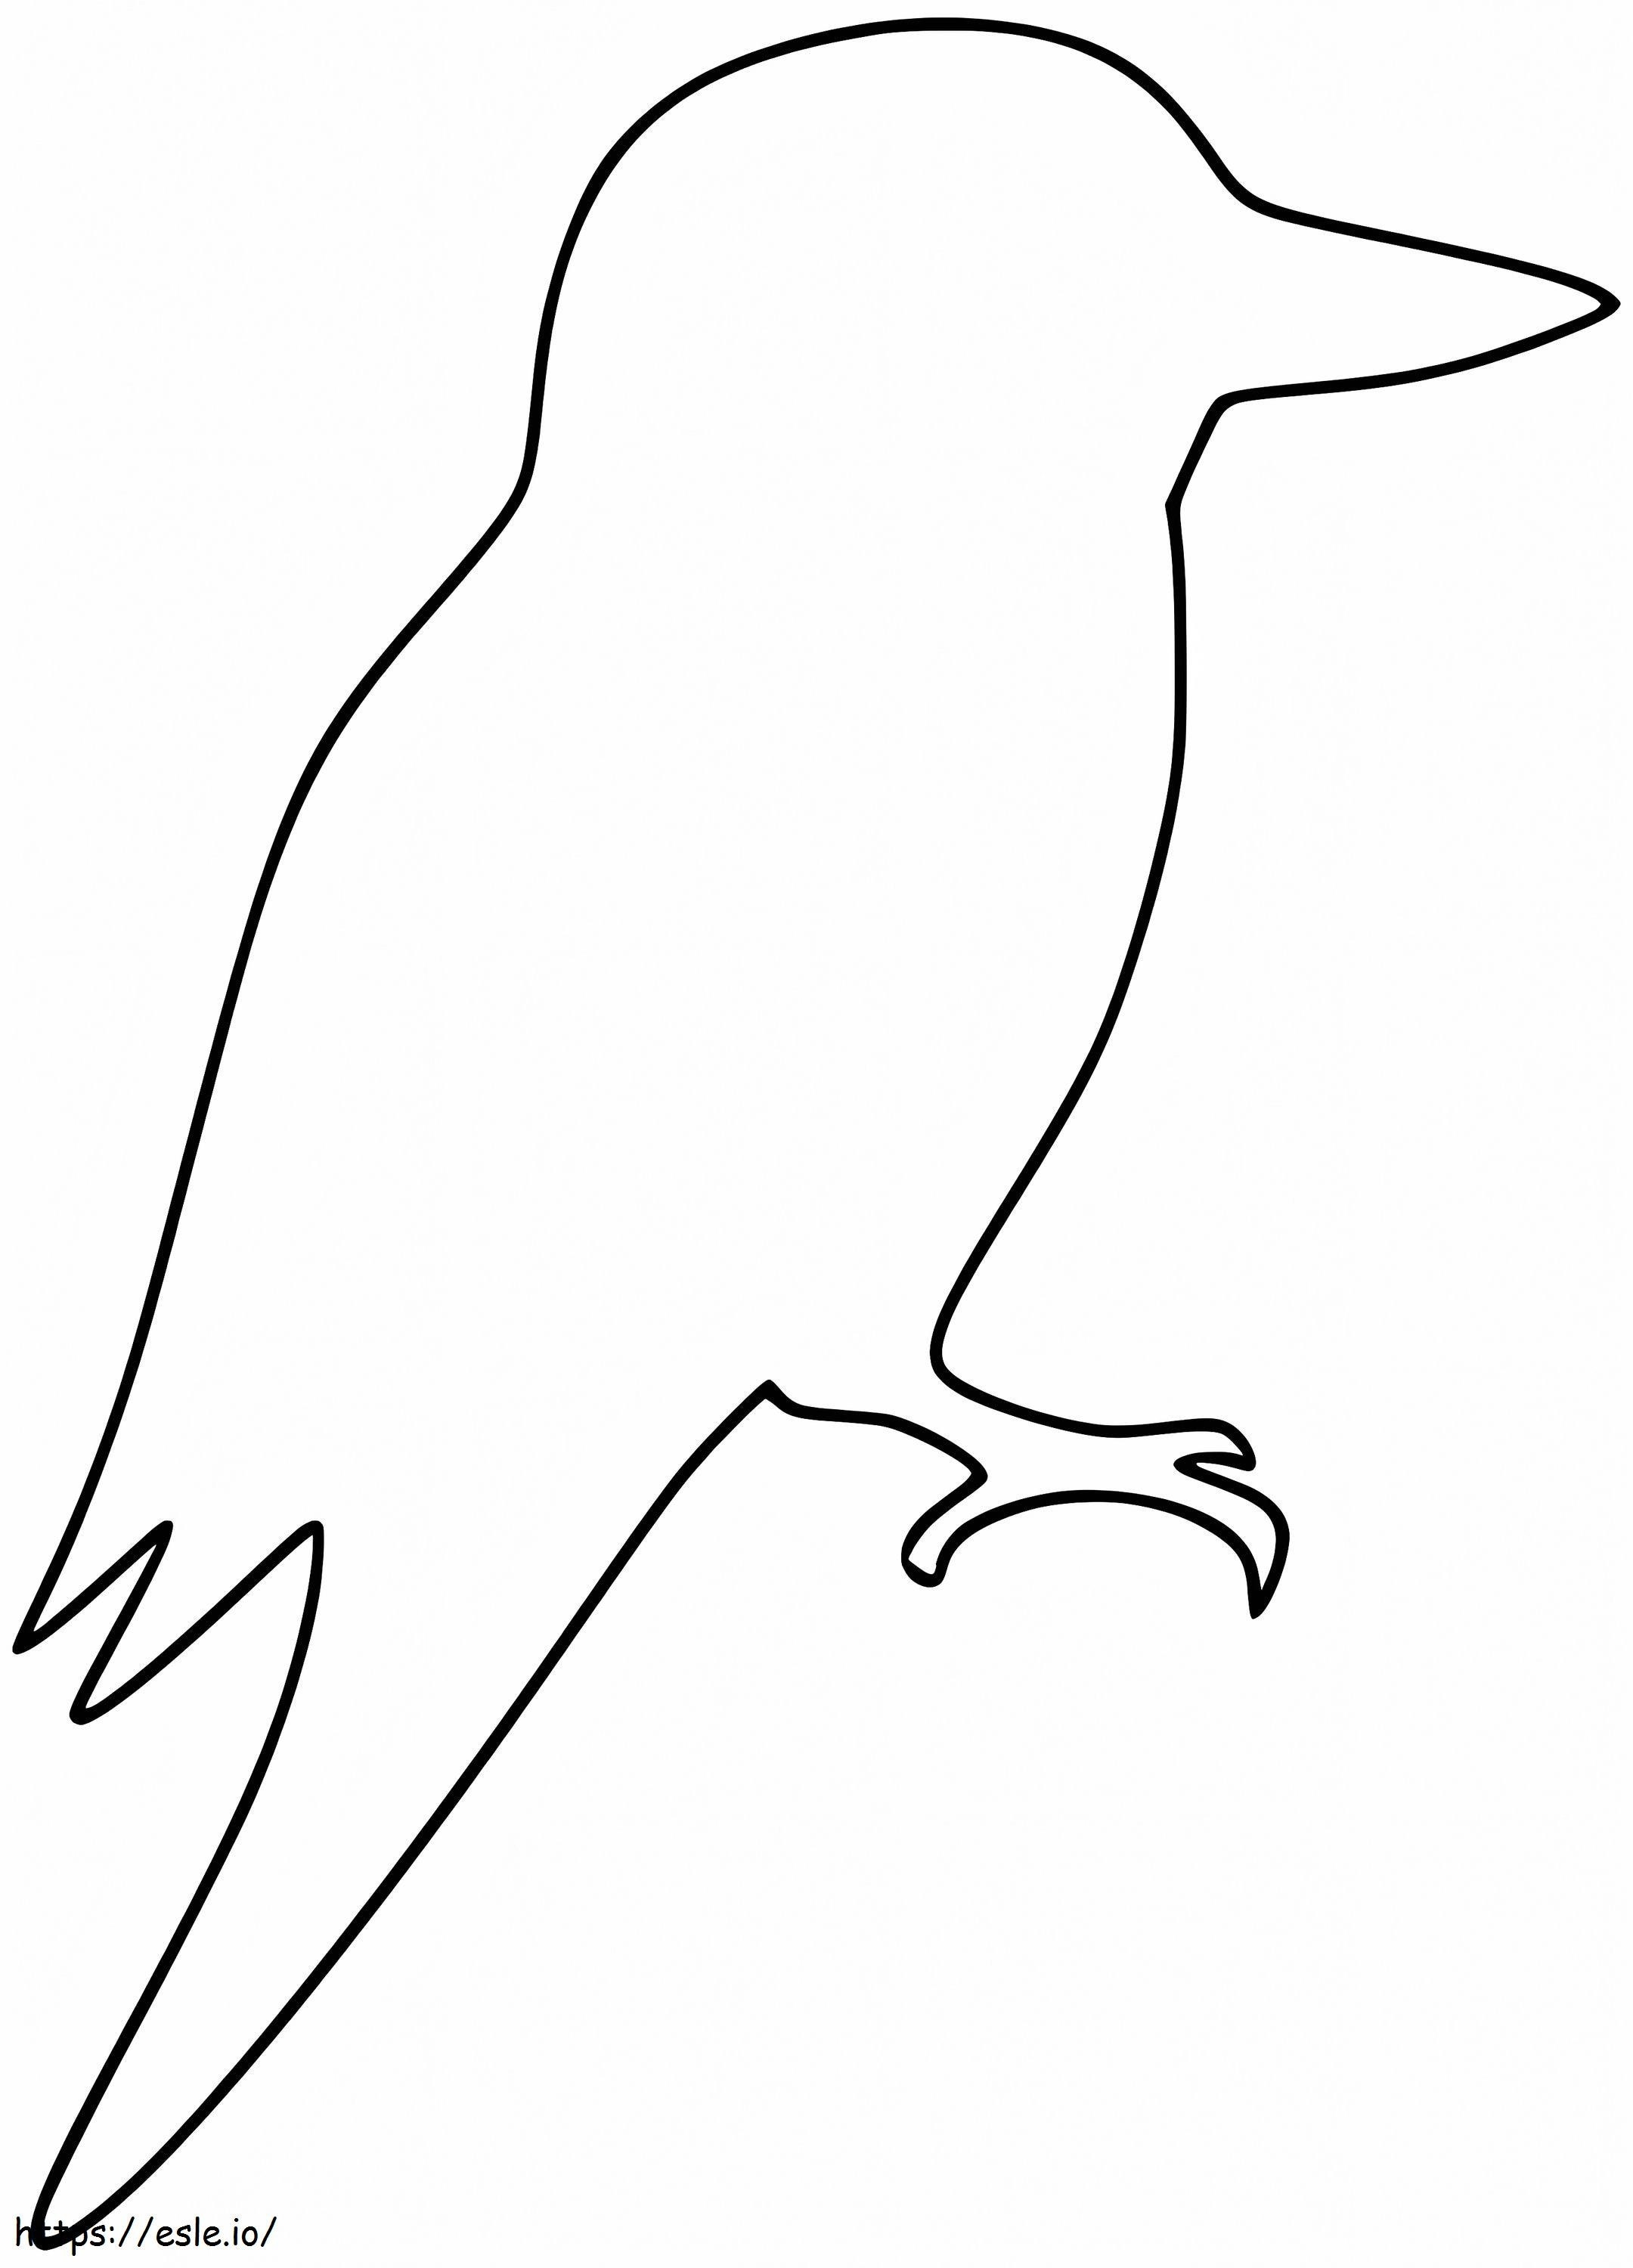 Kookaburra-Übersicht ausmalbilder